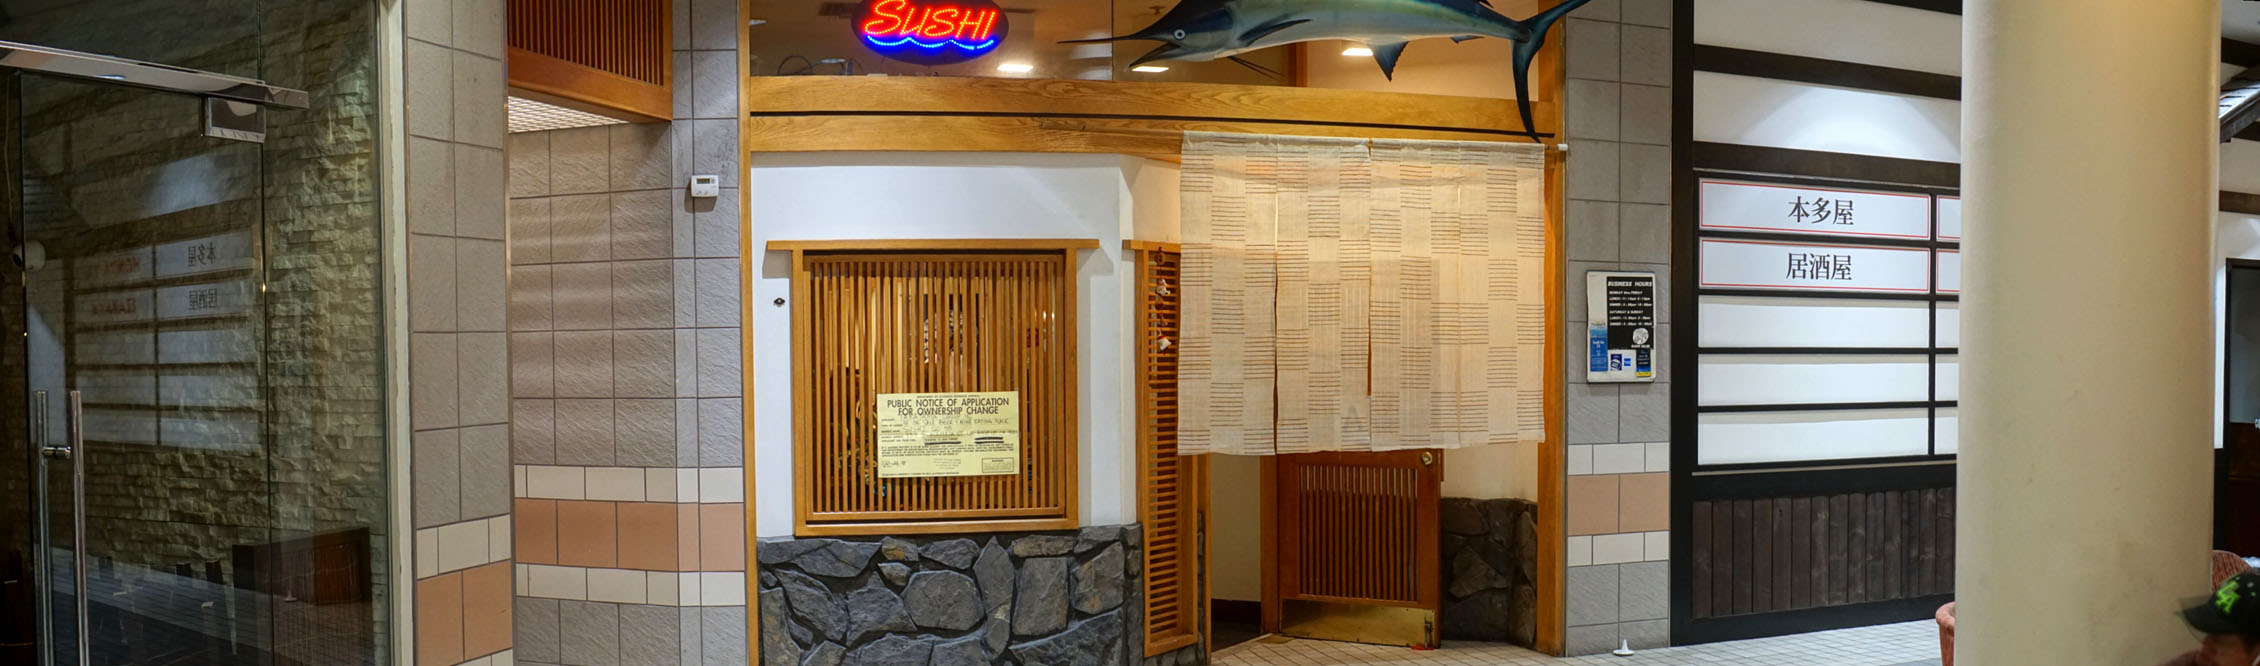 Sushi Go 55 Exterior